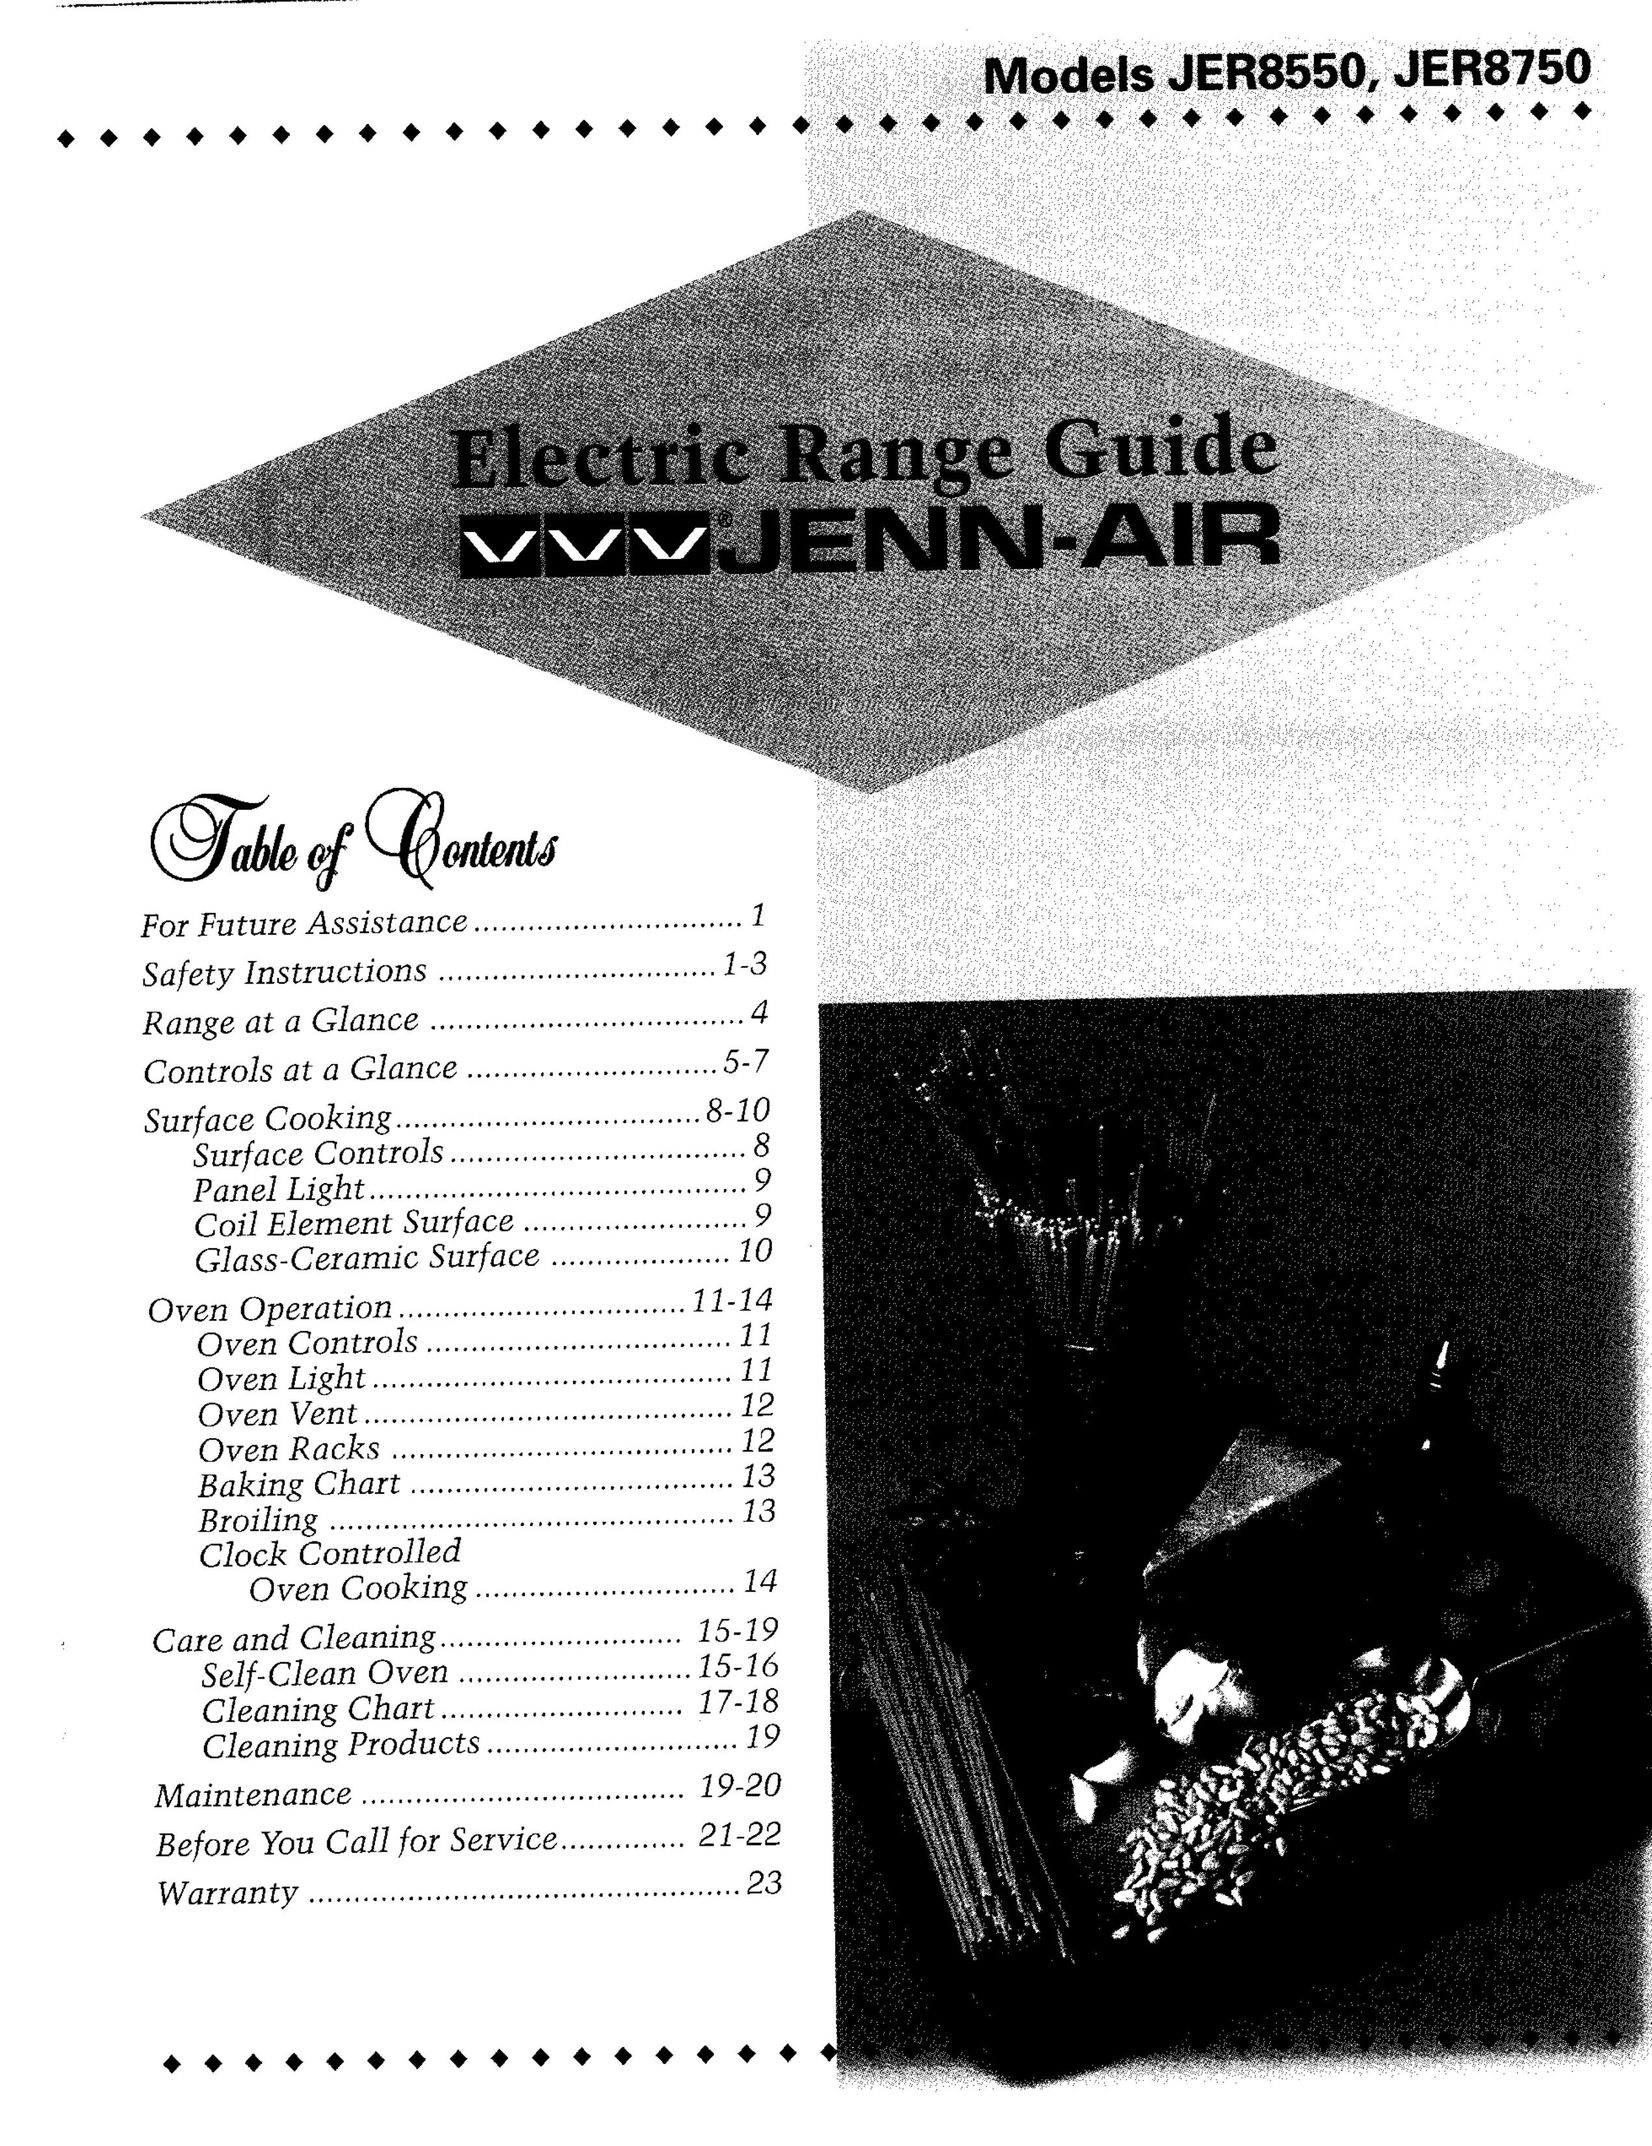 Jenn-Air JER8750 Range User Manual